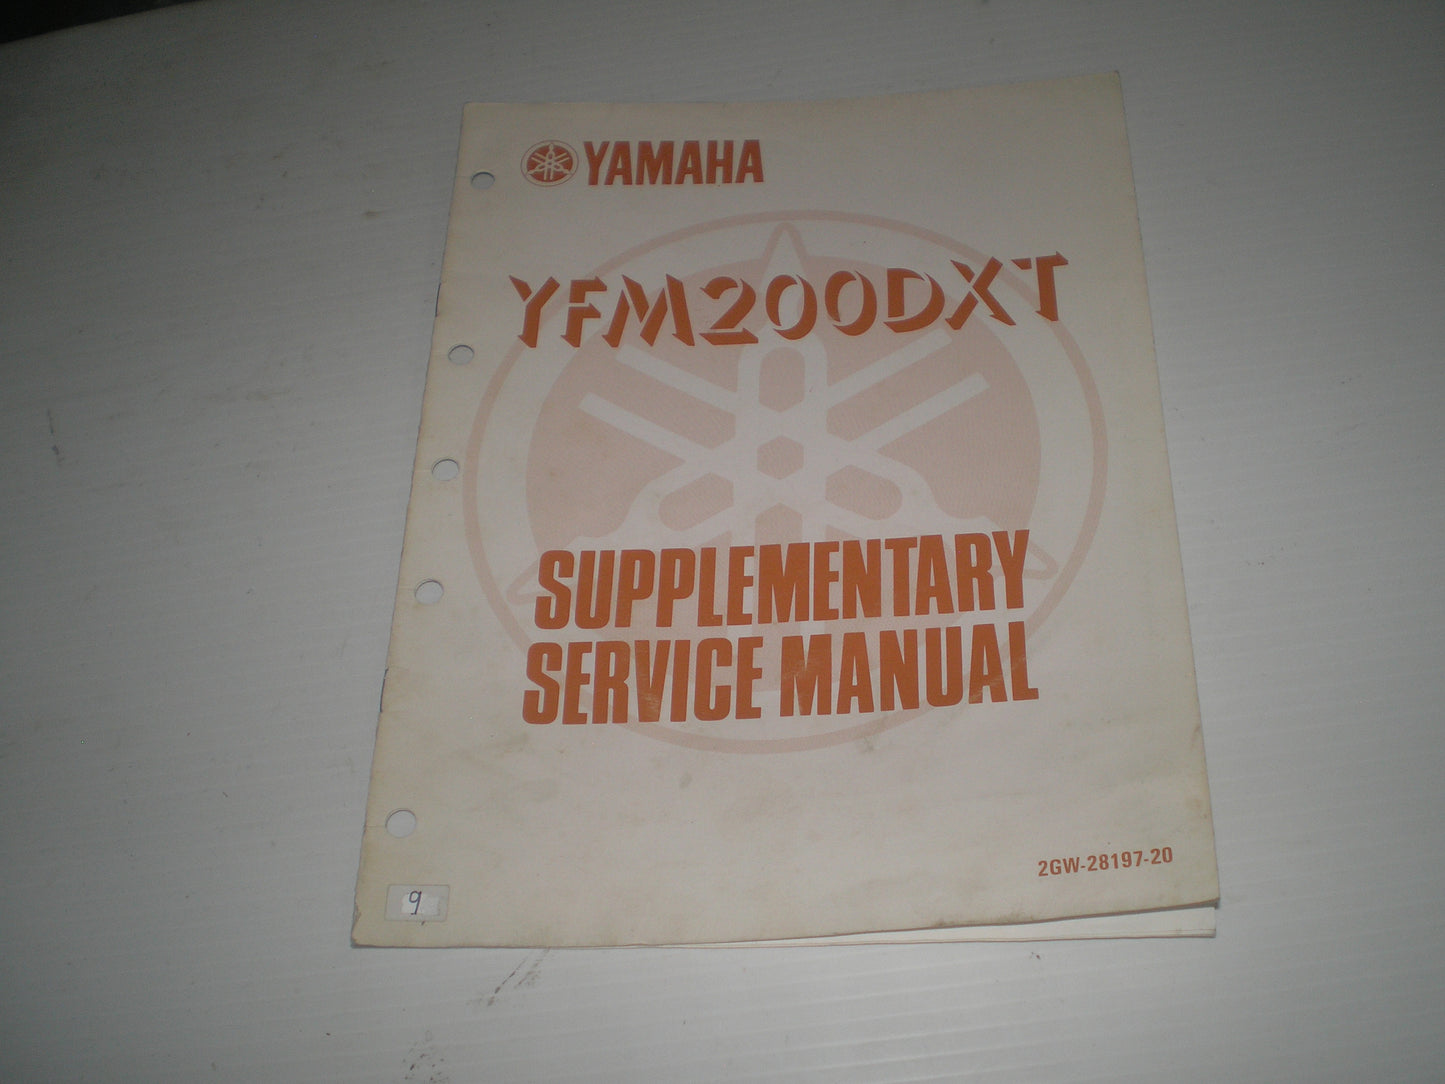 YAMAHA YFM200 DXT 1987 Supplementary Service Manual  2GW-28197-20  #9